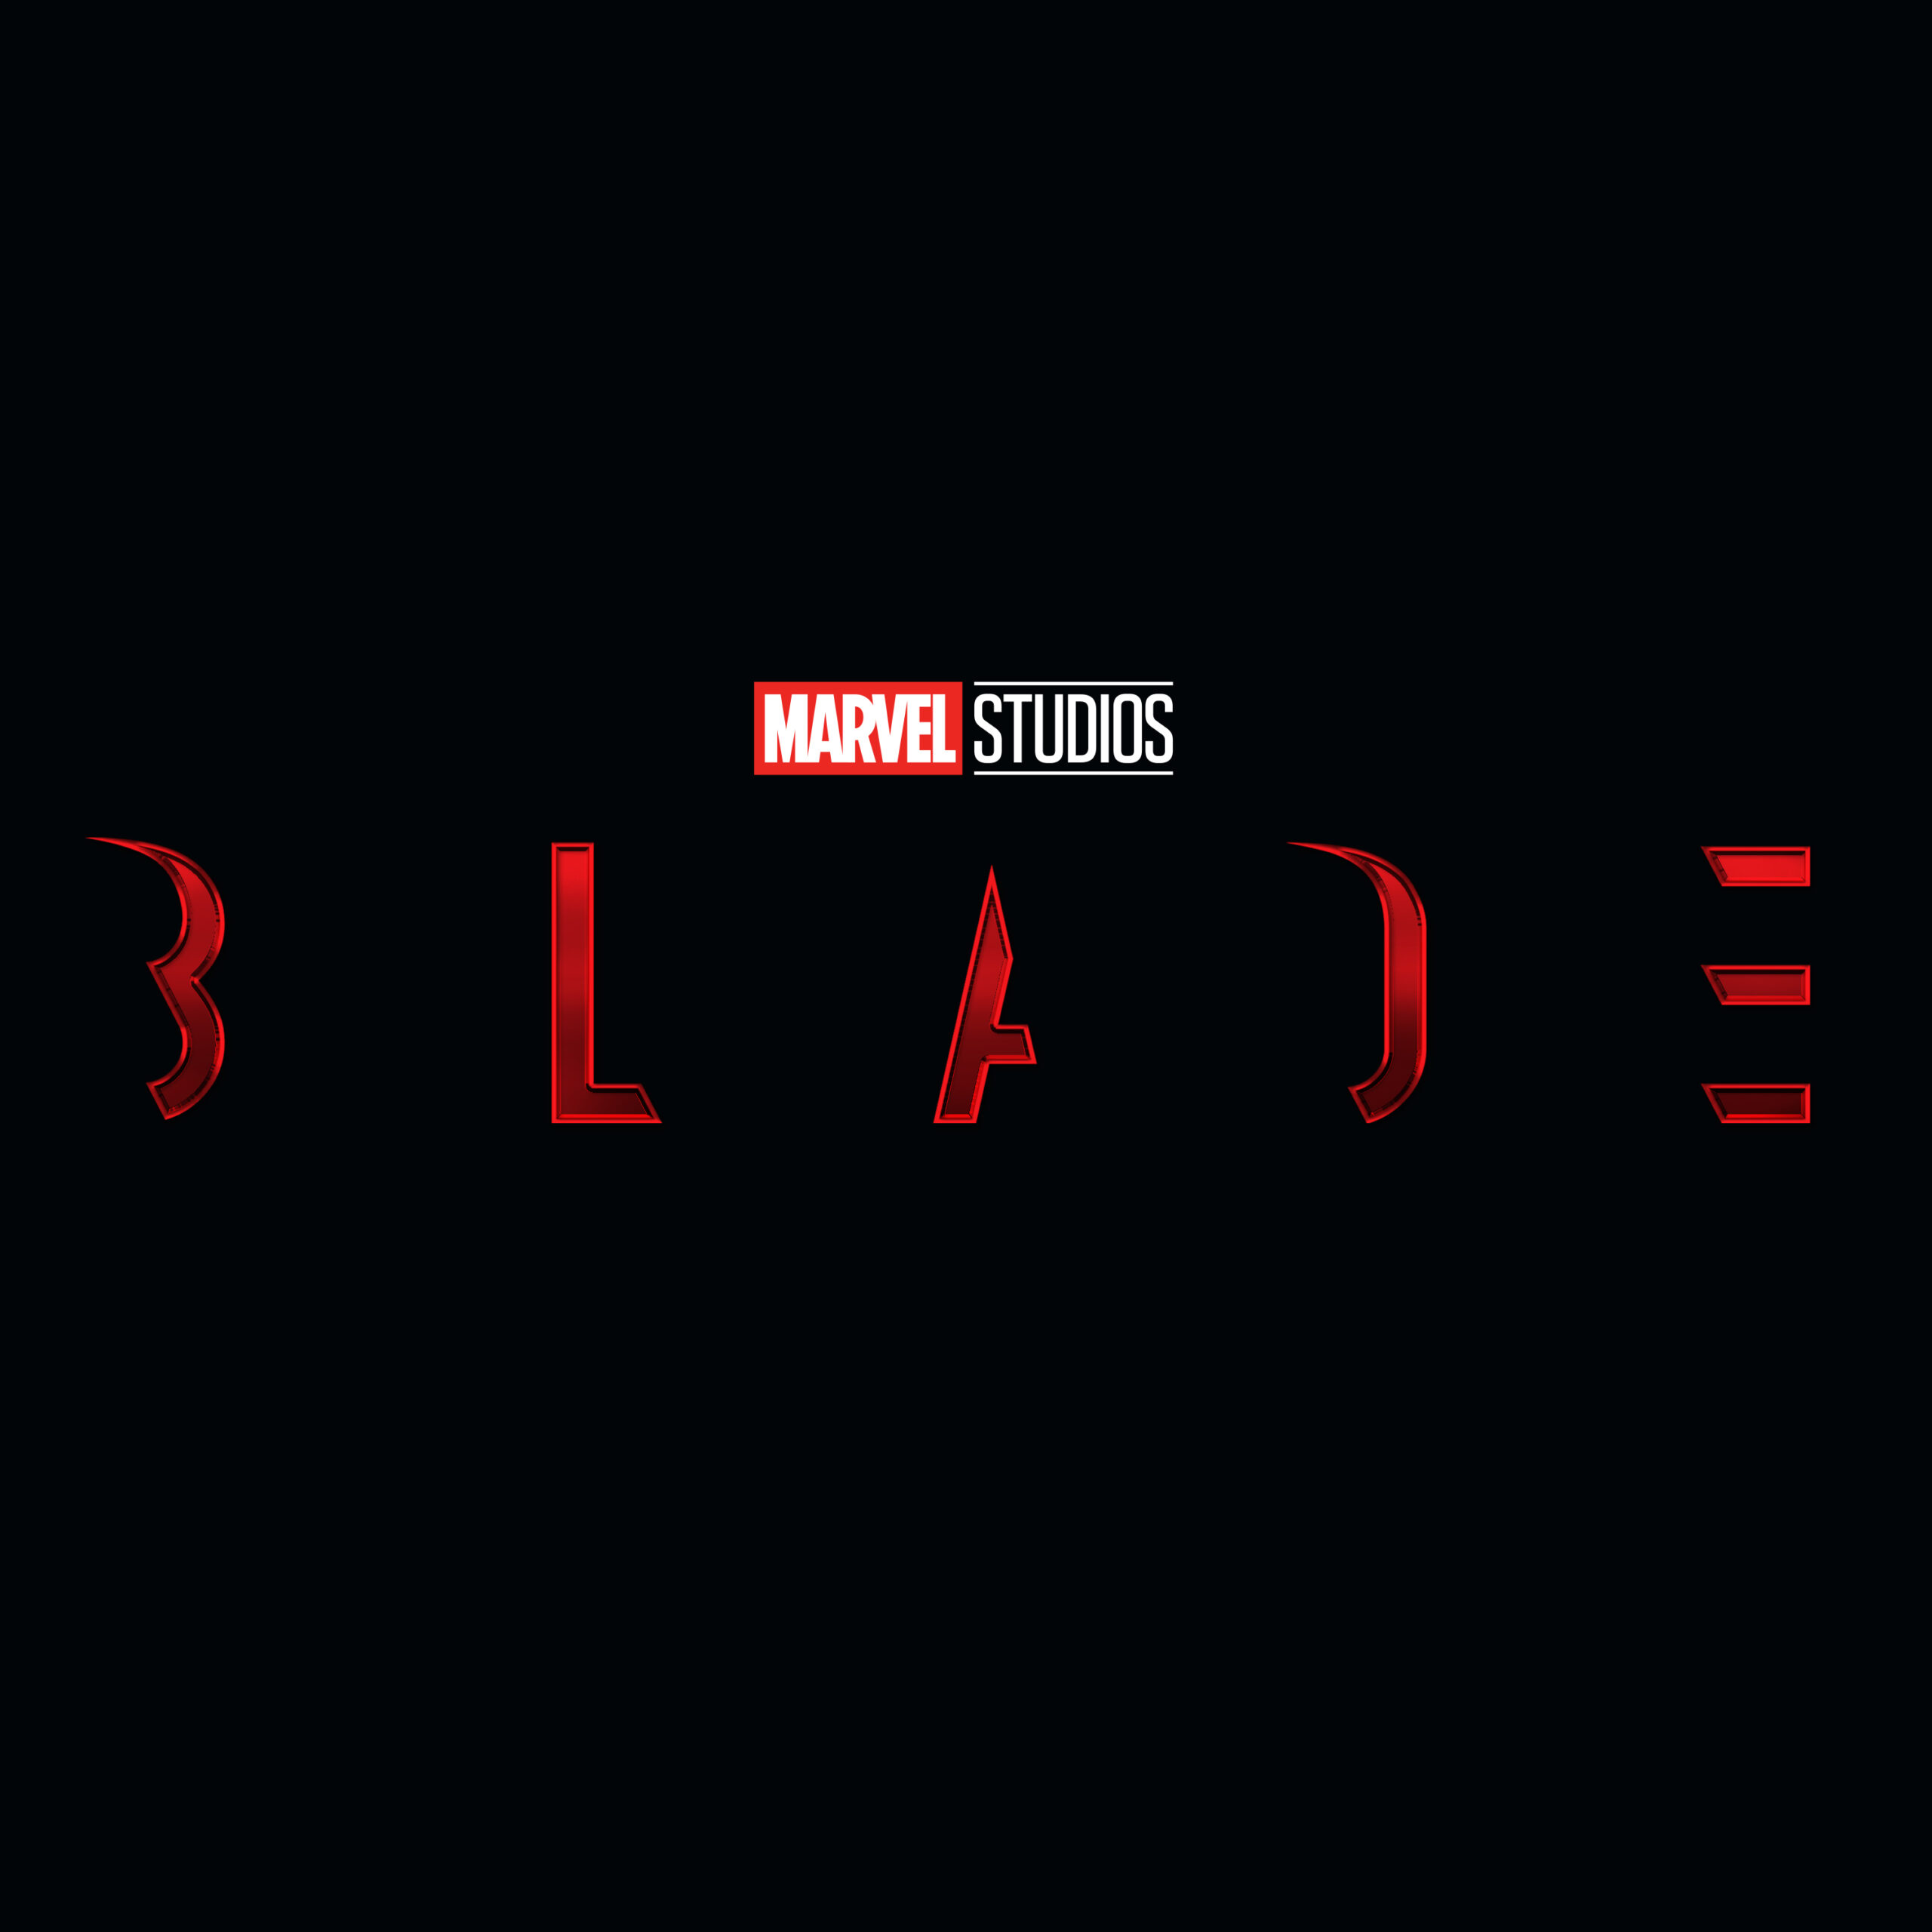 Blade Loses Director – Plus Rumors Around Delays And Script Issues